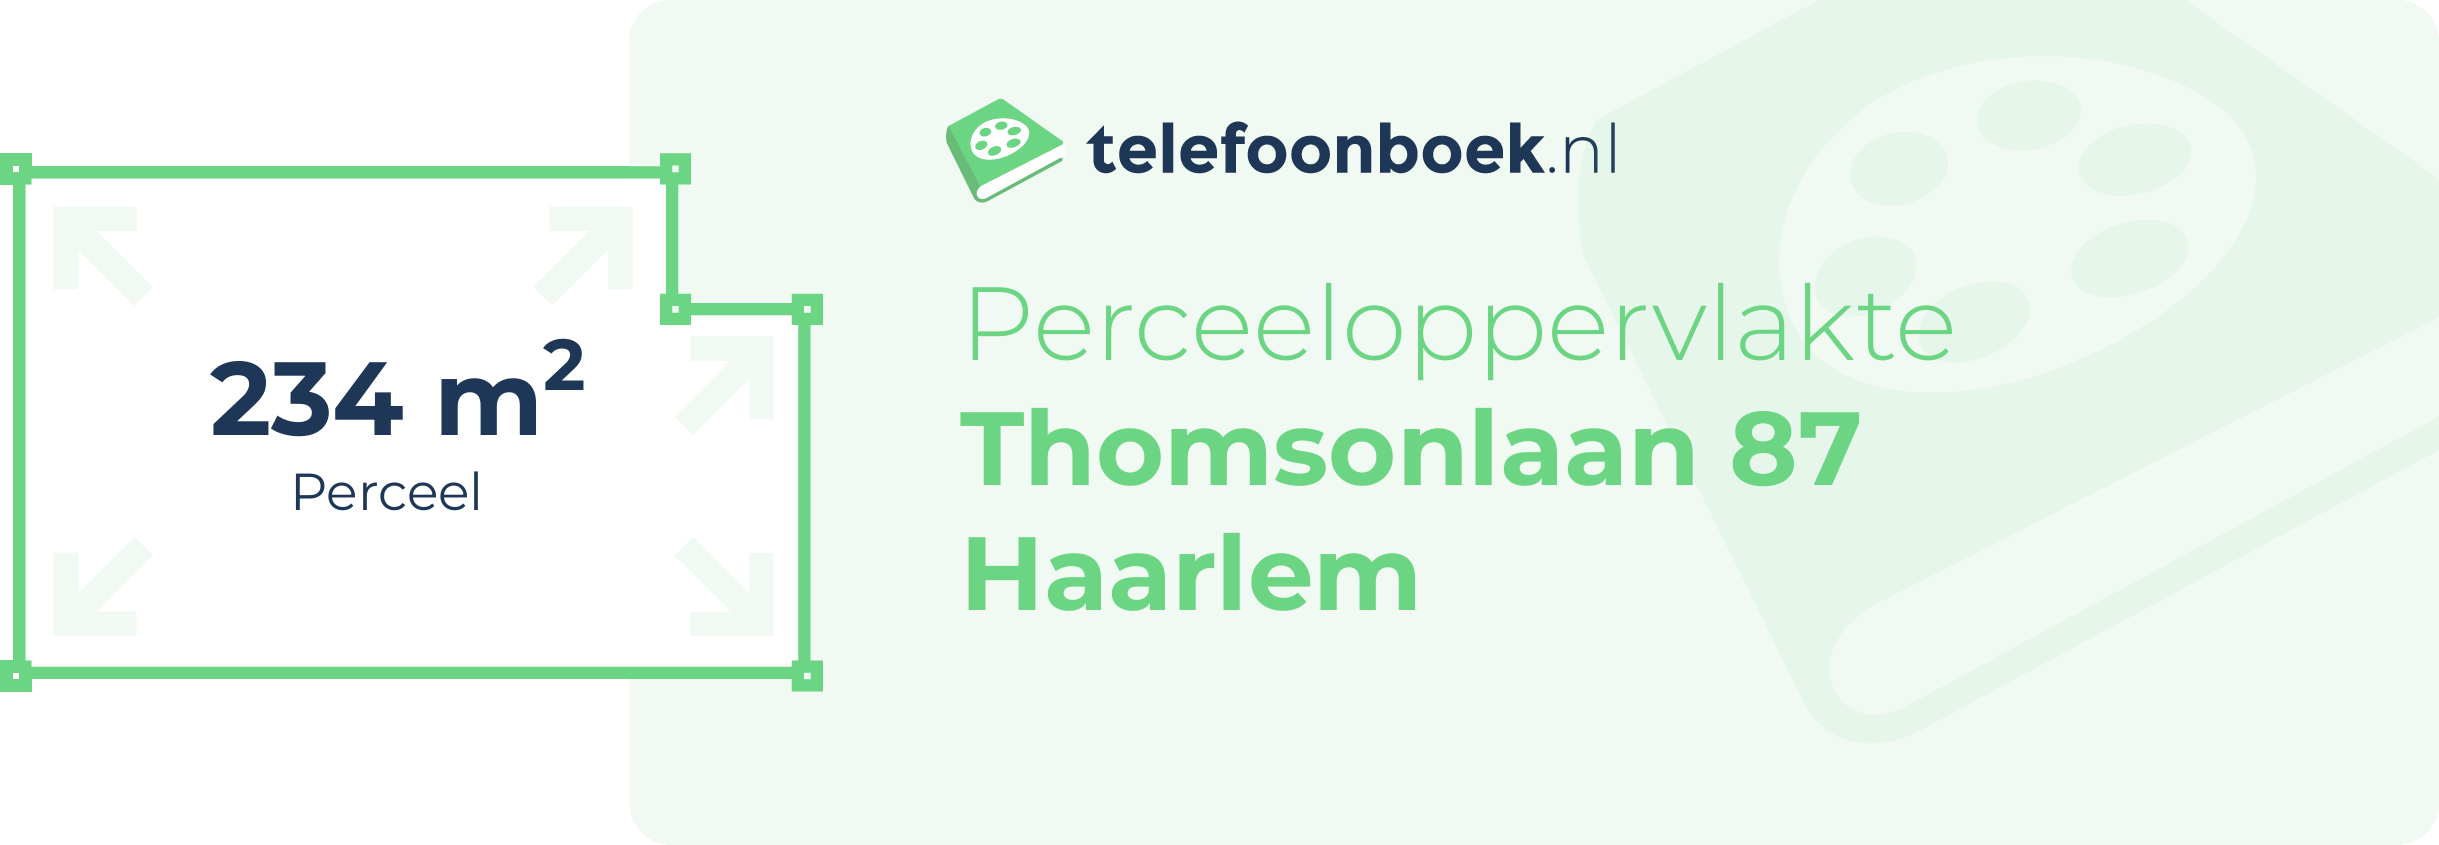 Perceeloppervlakte Thomsonlaan 87 Haarlem